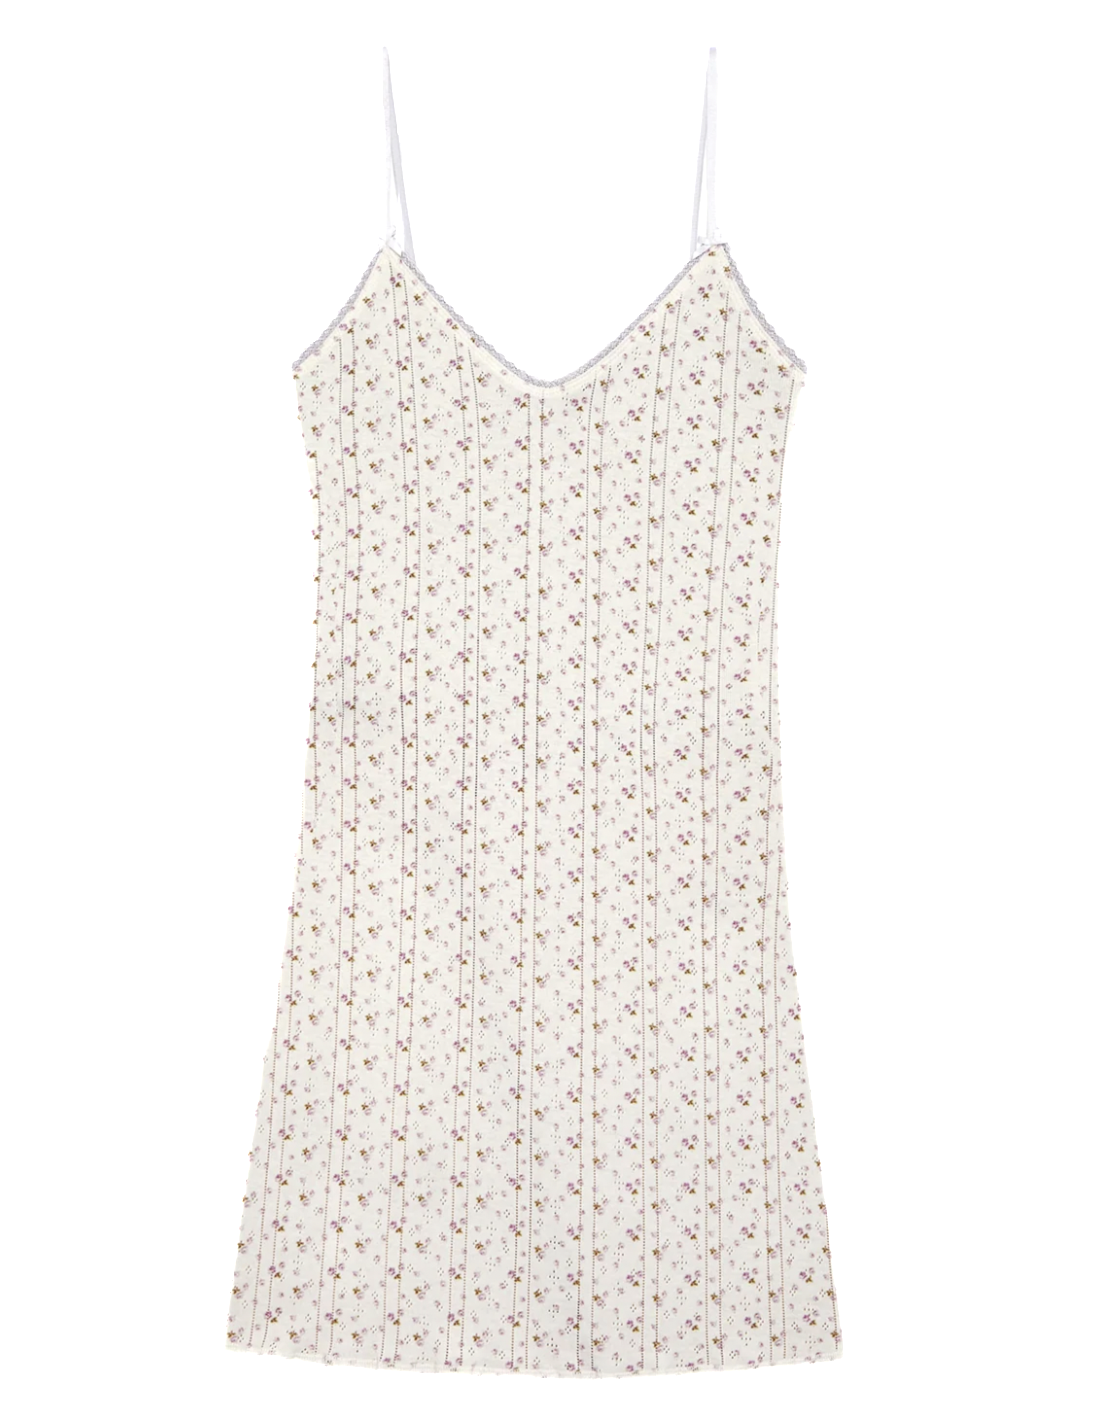 The Cami Slip Dress